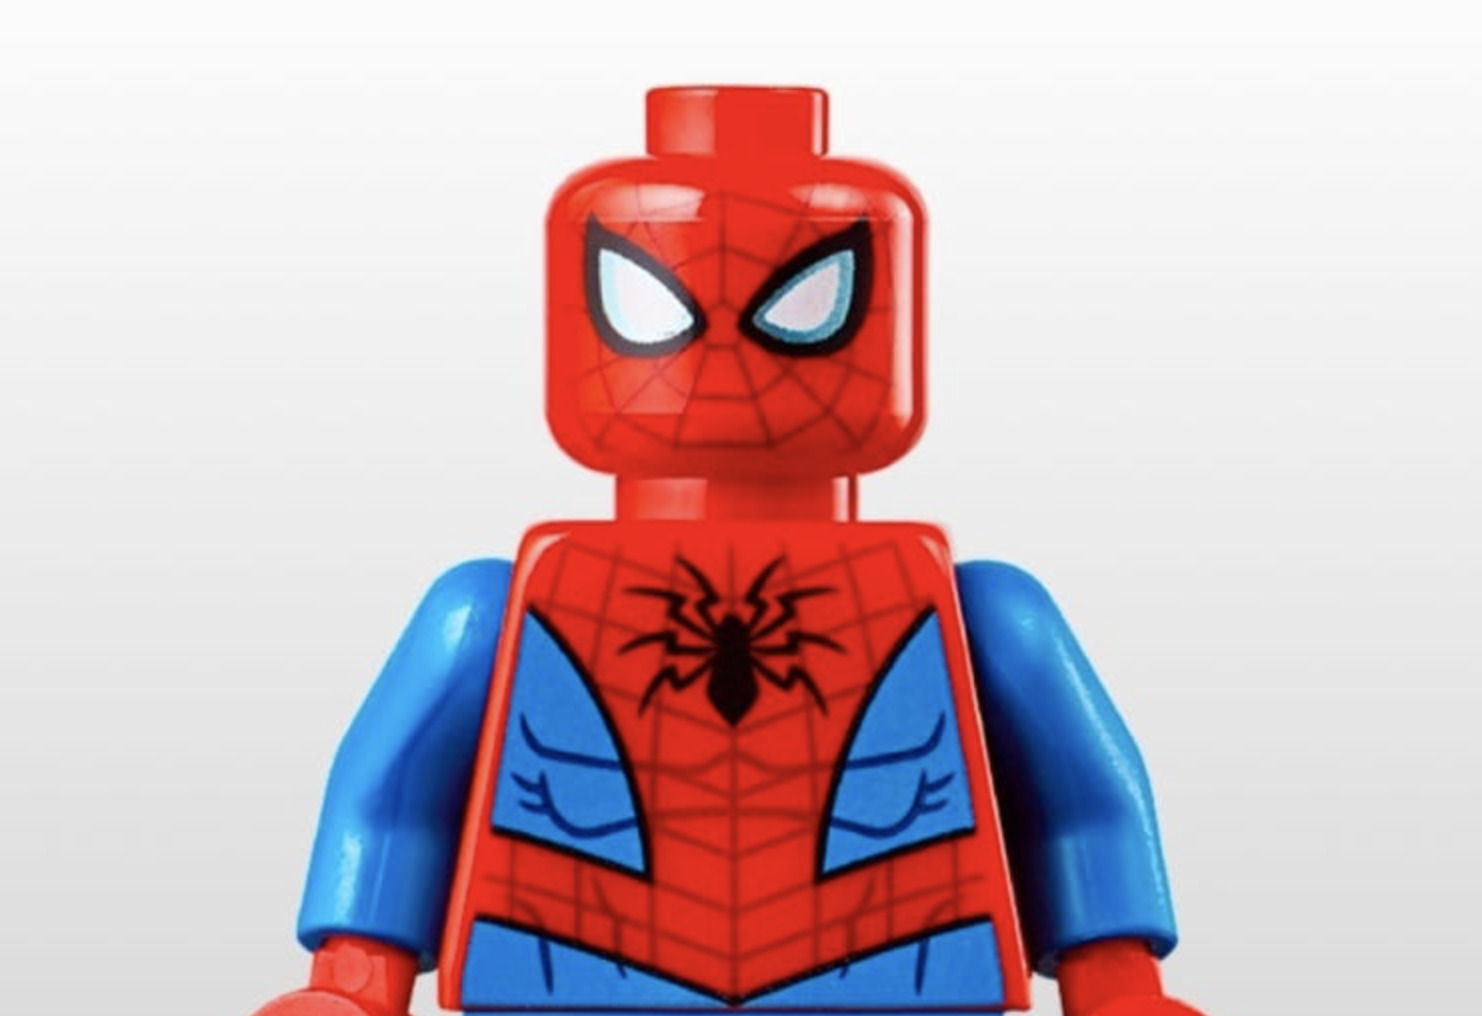 Spiderman Lego Exhibit Hong Kong